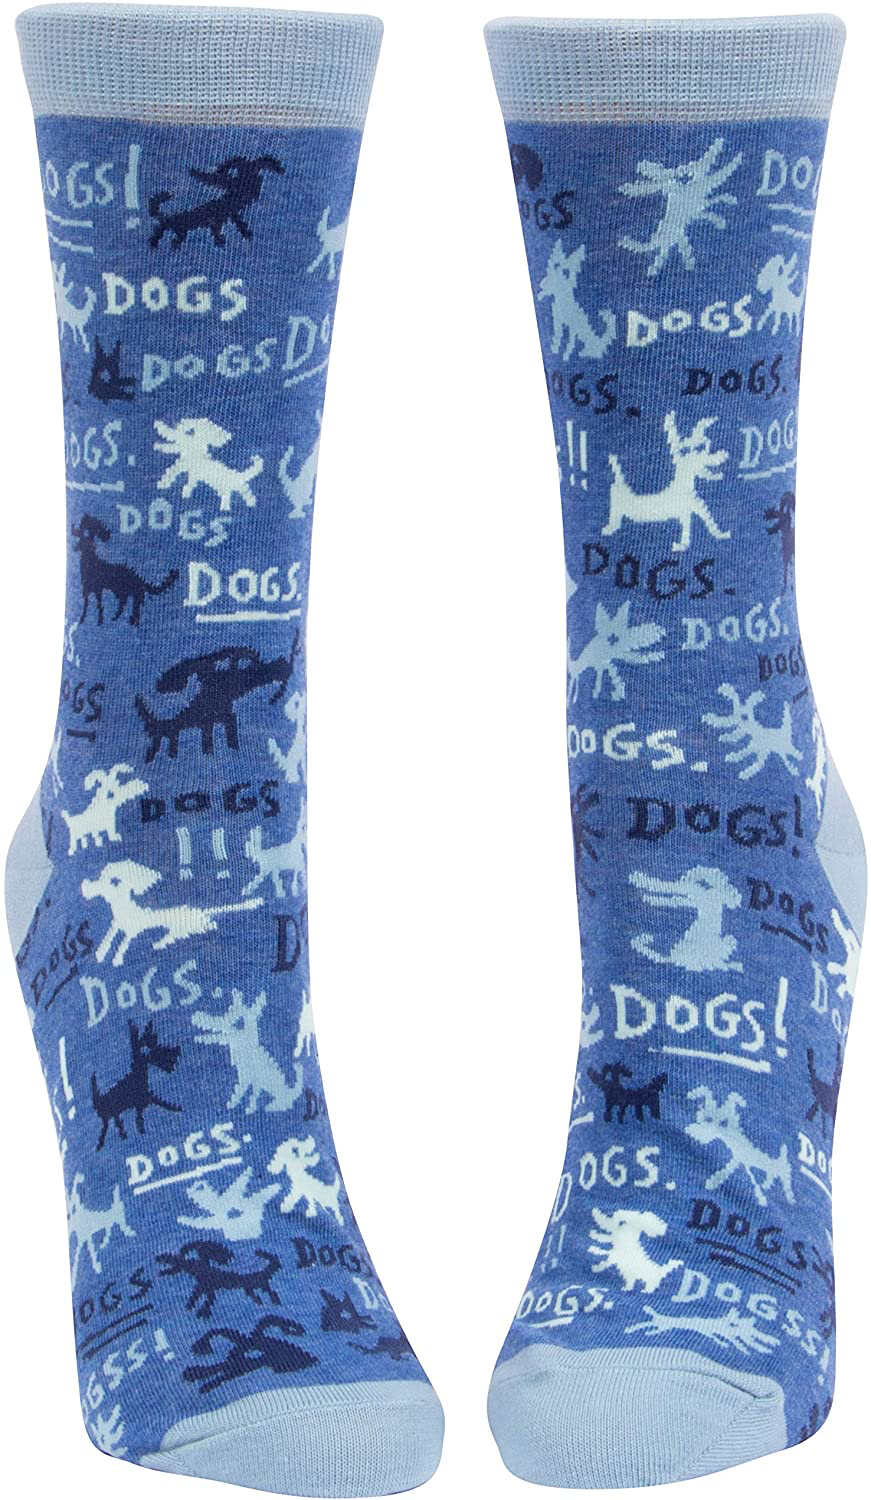 Dogs! Women's Crew Socks - Kingfisher Road - Online Boutique